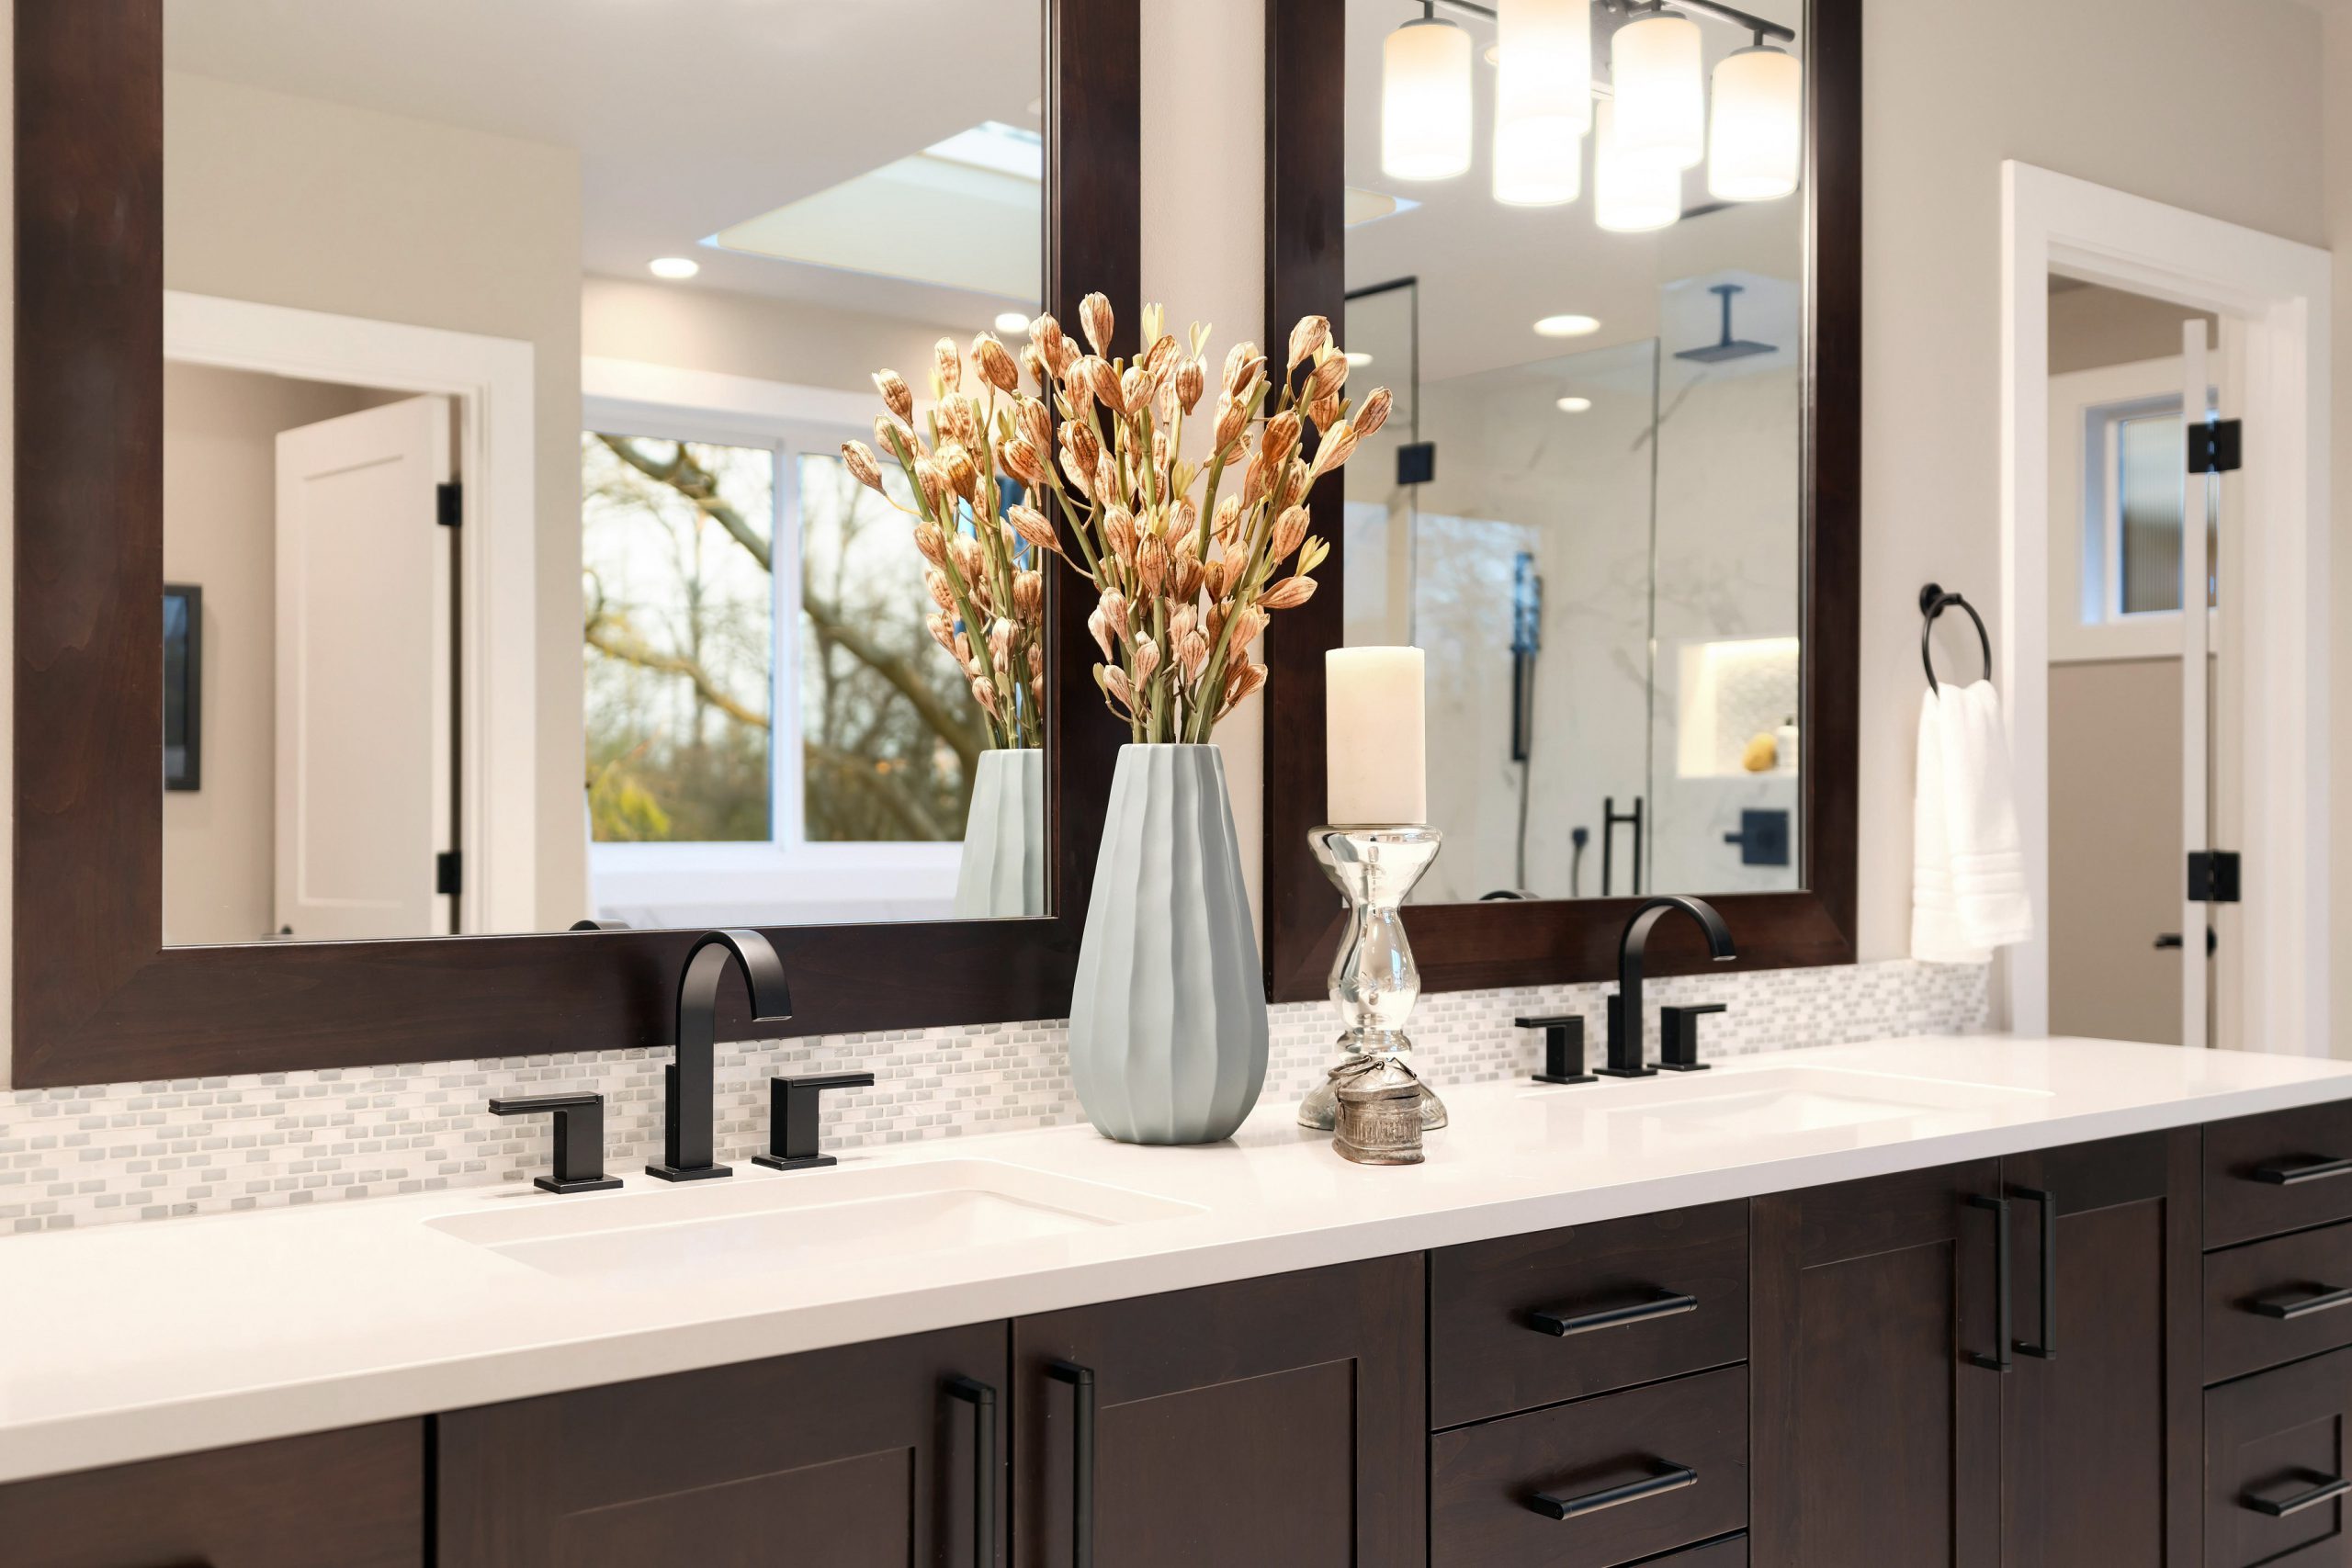 Luxury modern home bathroom interior with dark brown cabinets, white marble, walk in shower, free standing tub.